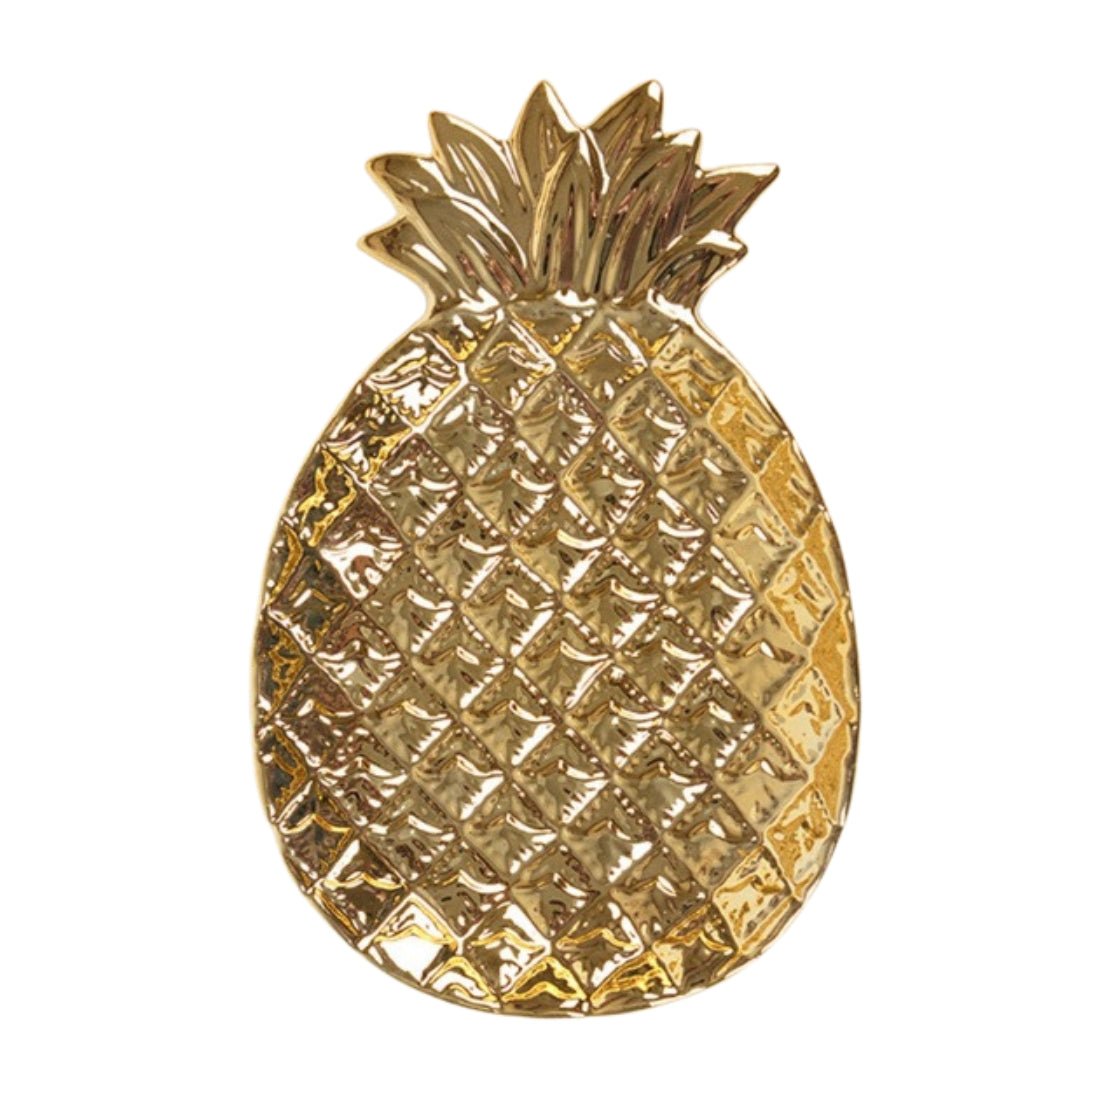 Gold, ceramic pineapple decorative tray